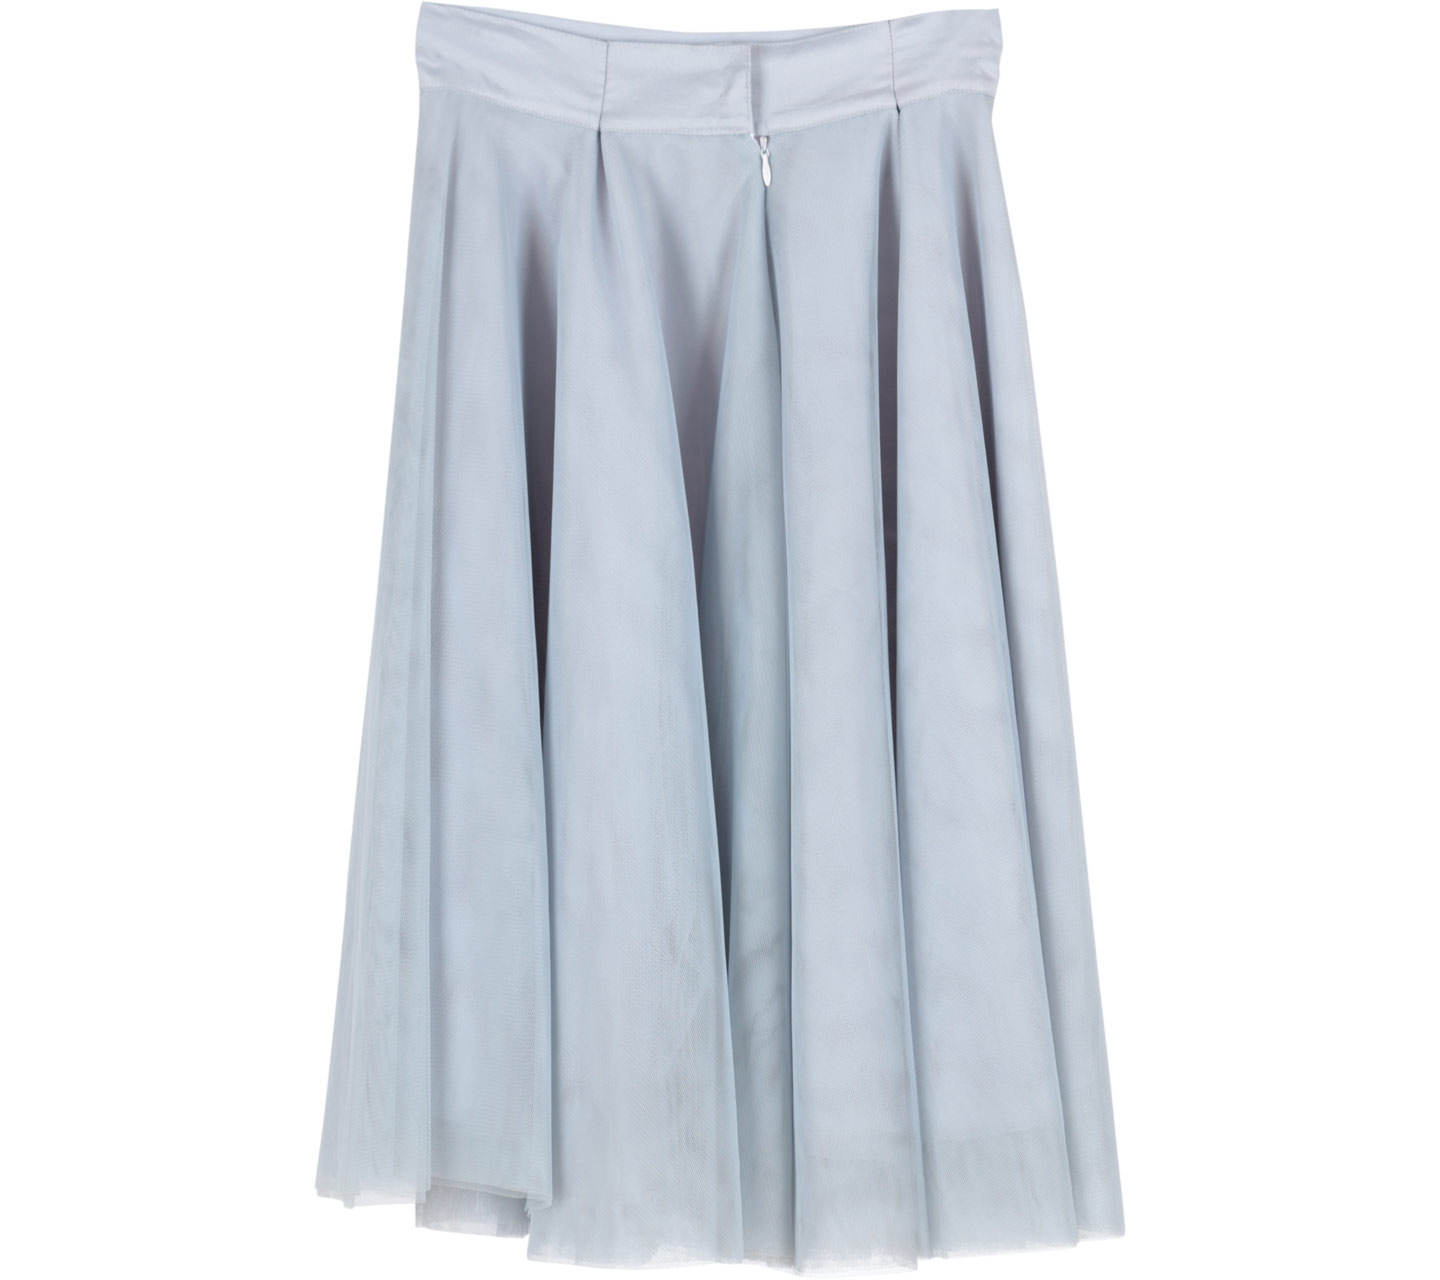 Maniere-E Grey Tulle Skirt